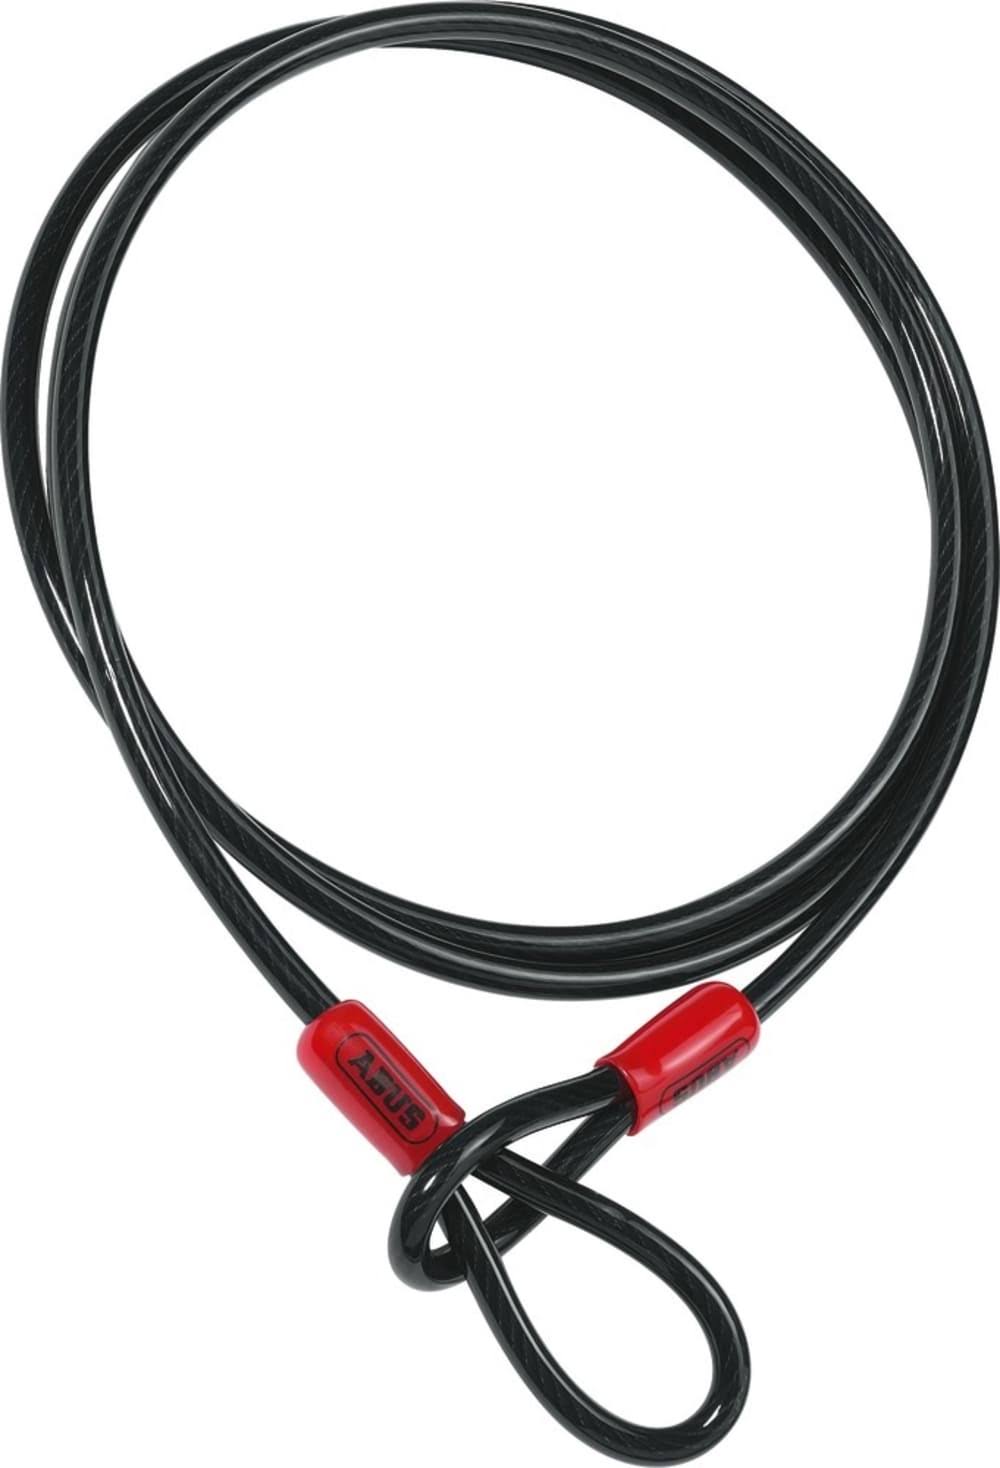 Abus Locks Cobra Cable Lock - Black, 10mm x20cm